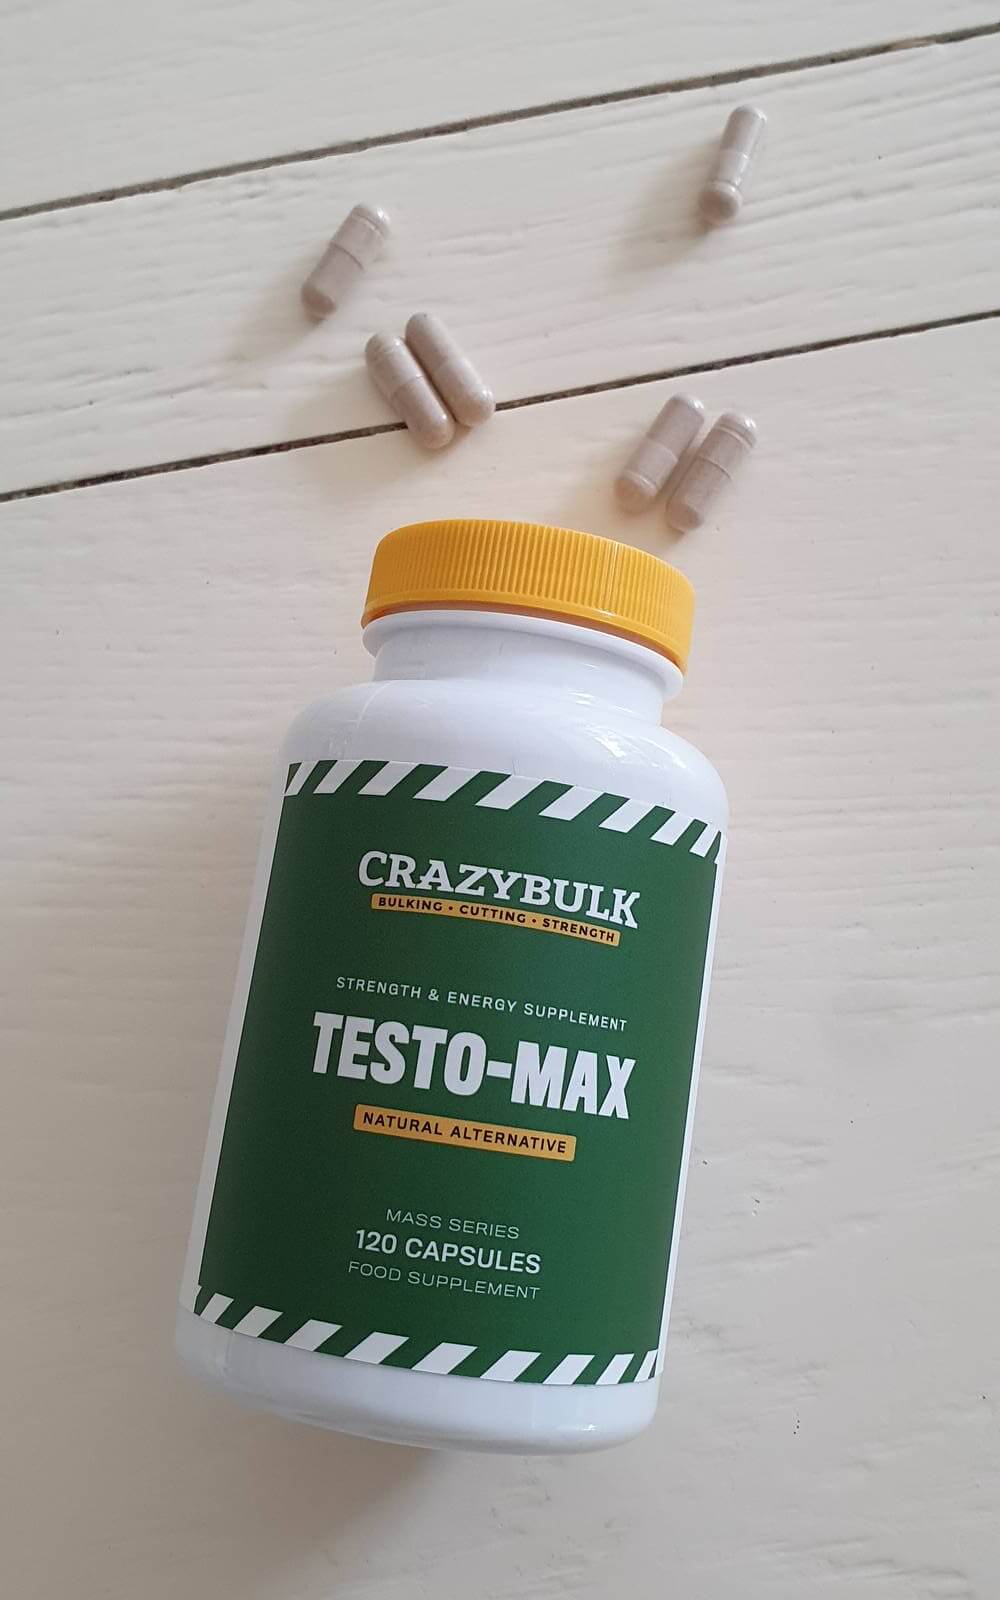 testo-max pills